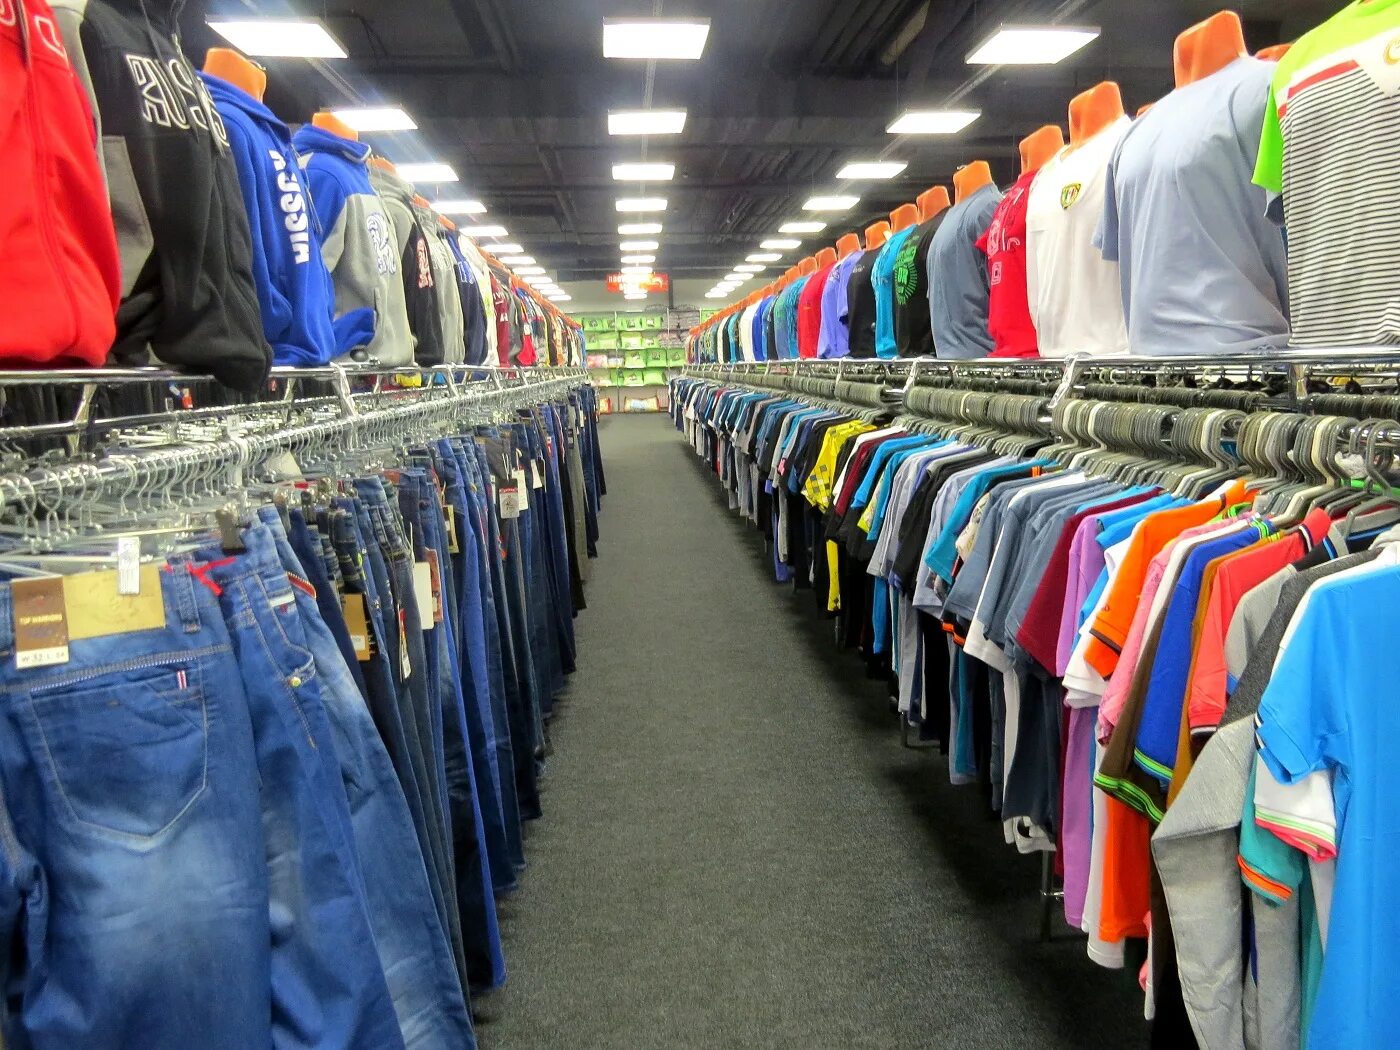 Склад одежды. Оптовый склад одежды. Рынок одежды. Ассортимент одежды.